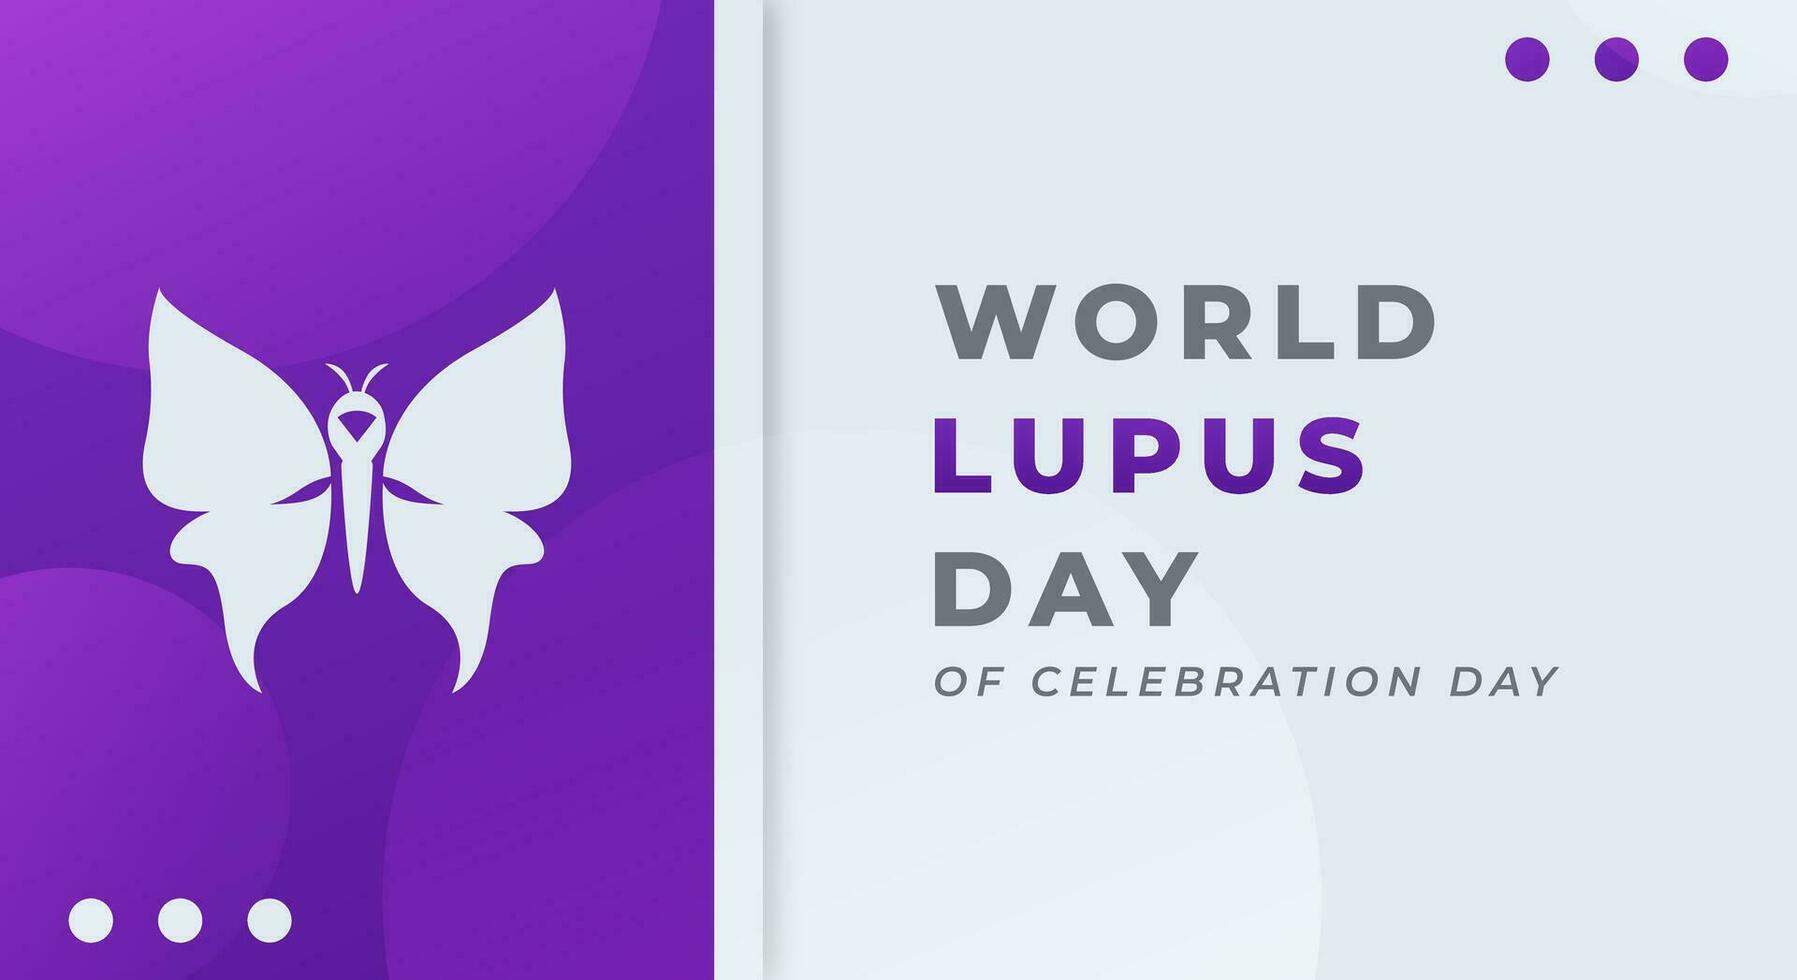 World Lupus Day Celebration Vector Design Illustration for Background, Poster, Banner, Advertising, Greeting Card